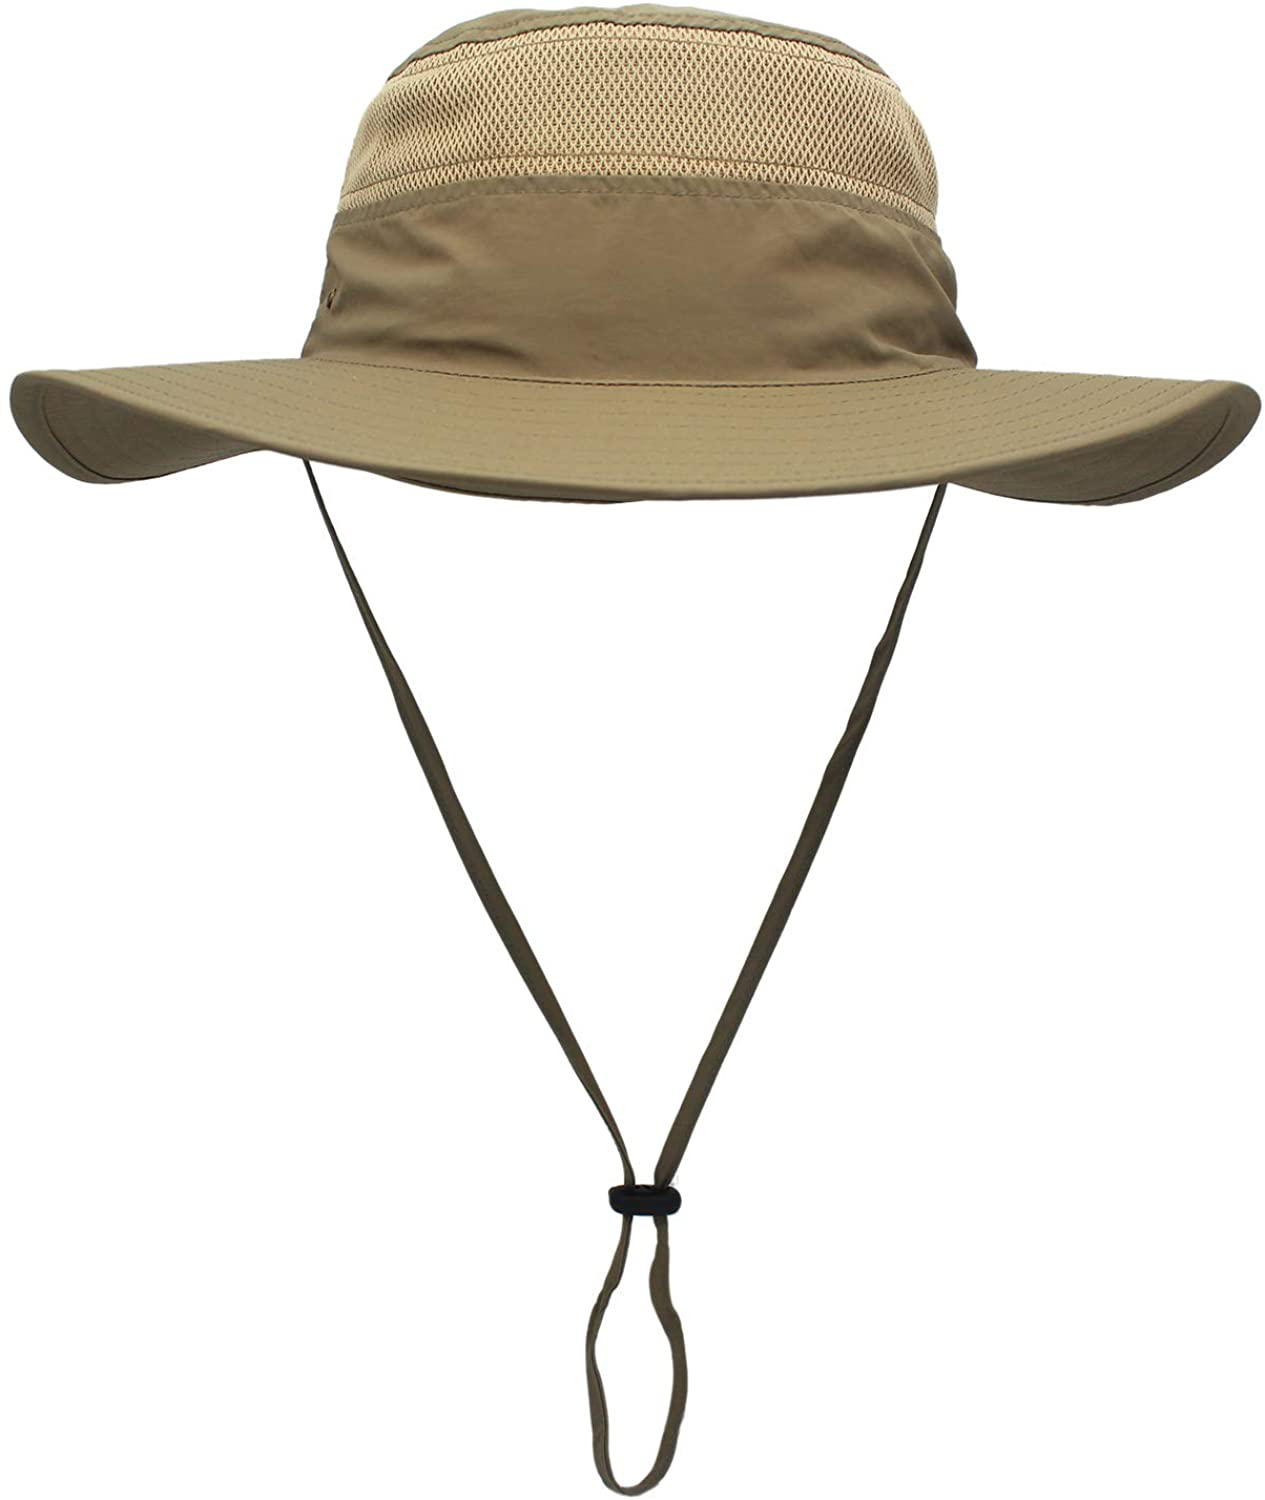 Home Prefer Men's Sun Hat UPF 50+ Wide Brim Bucket Hat Windproof